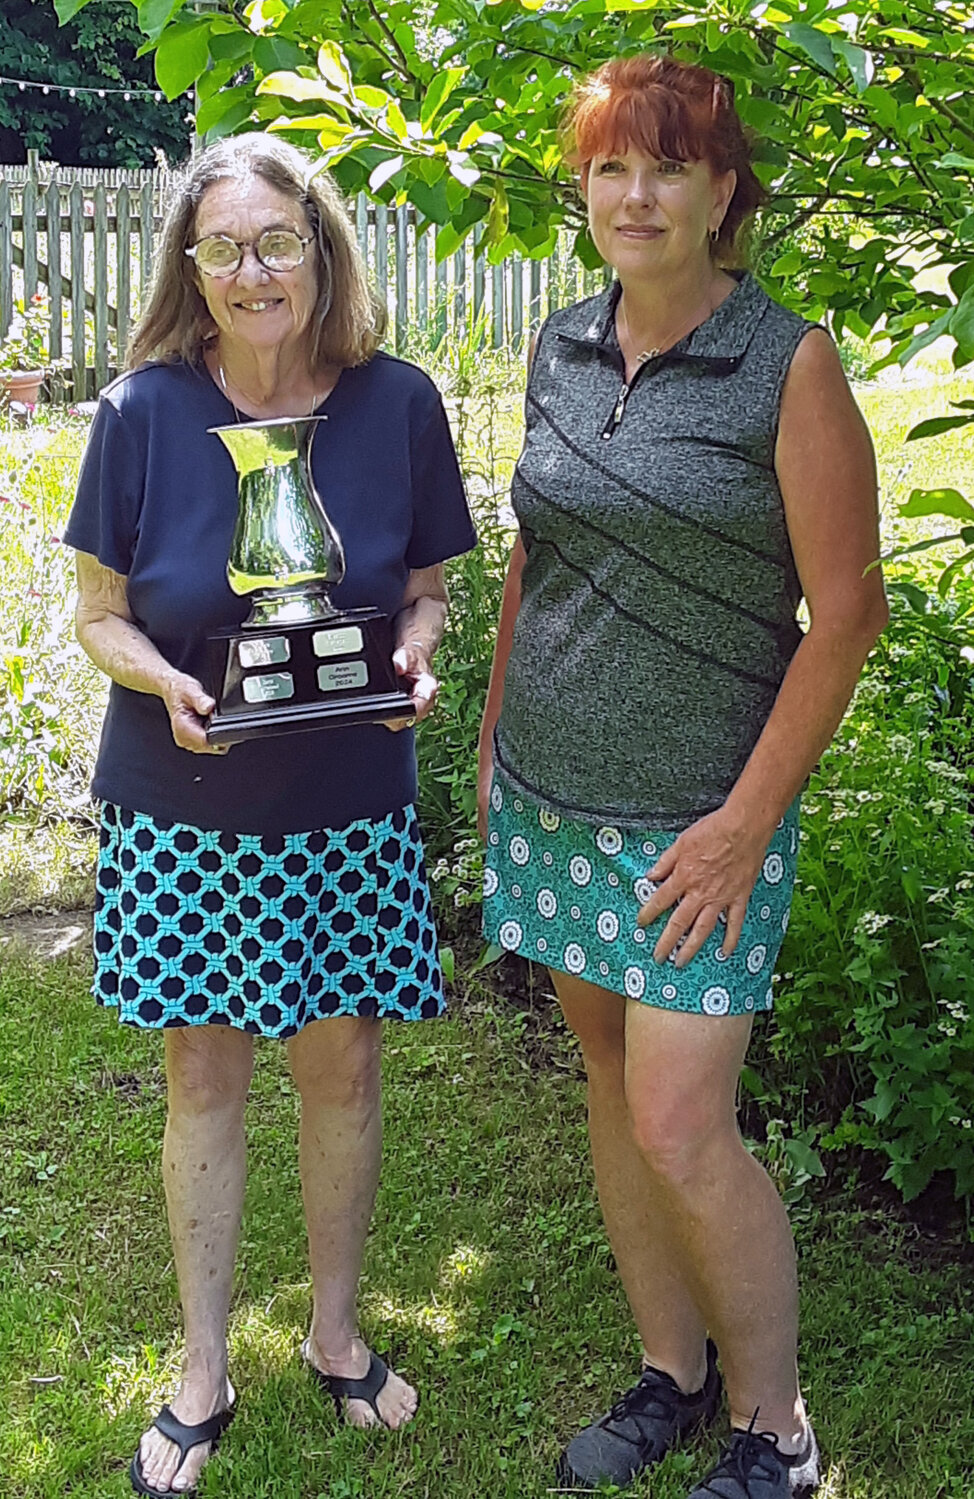 Groome presented the Irma Markert Garden Club Award